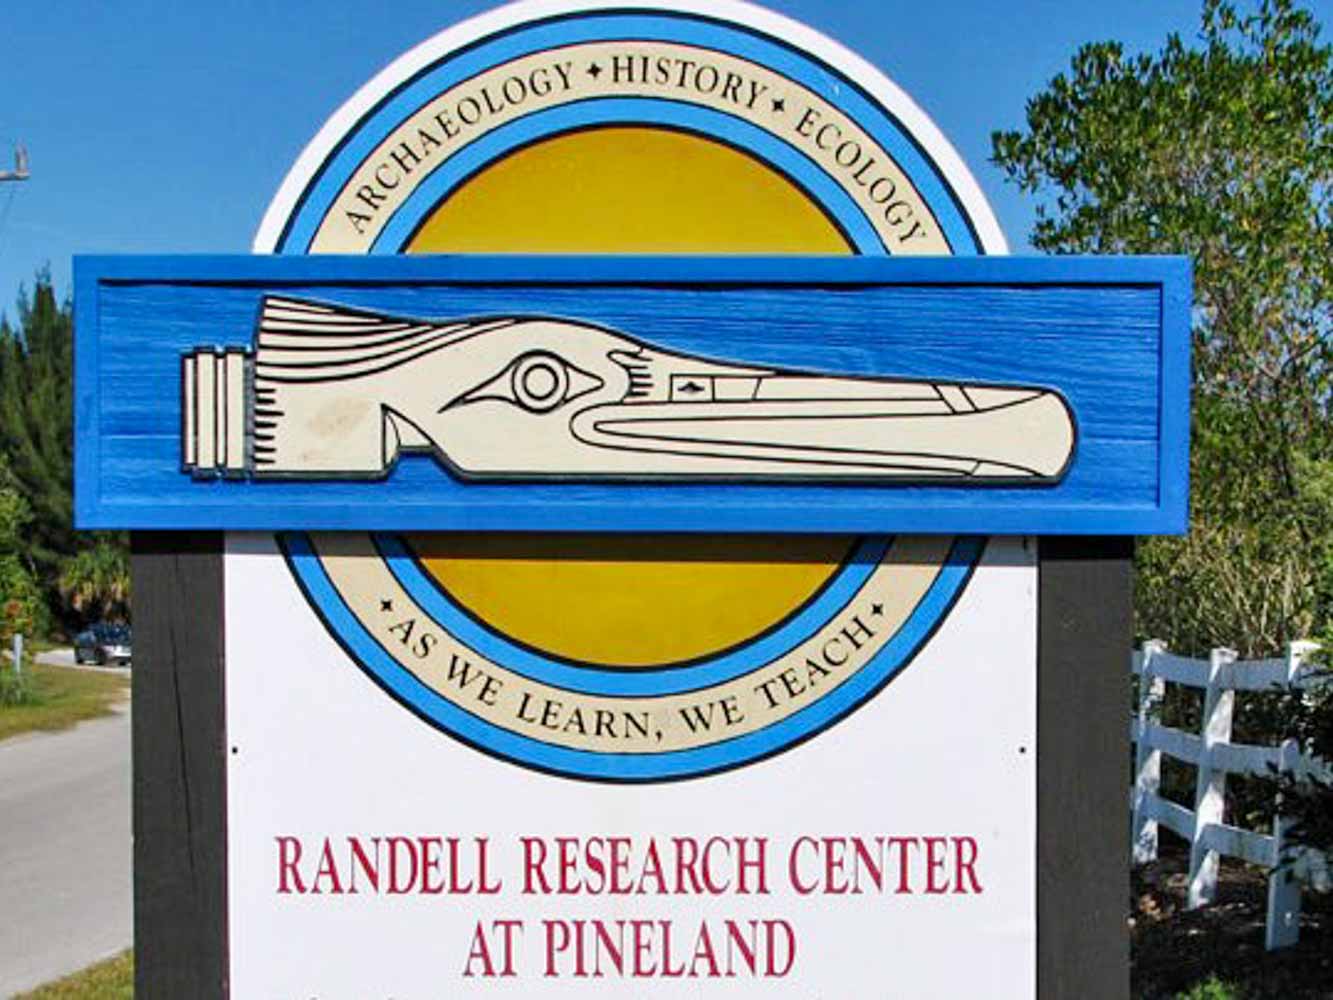 Randell Research Center